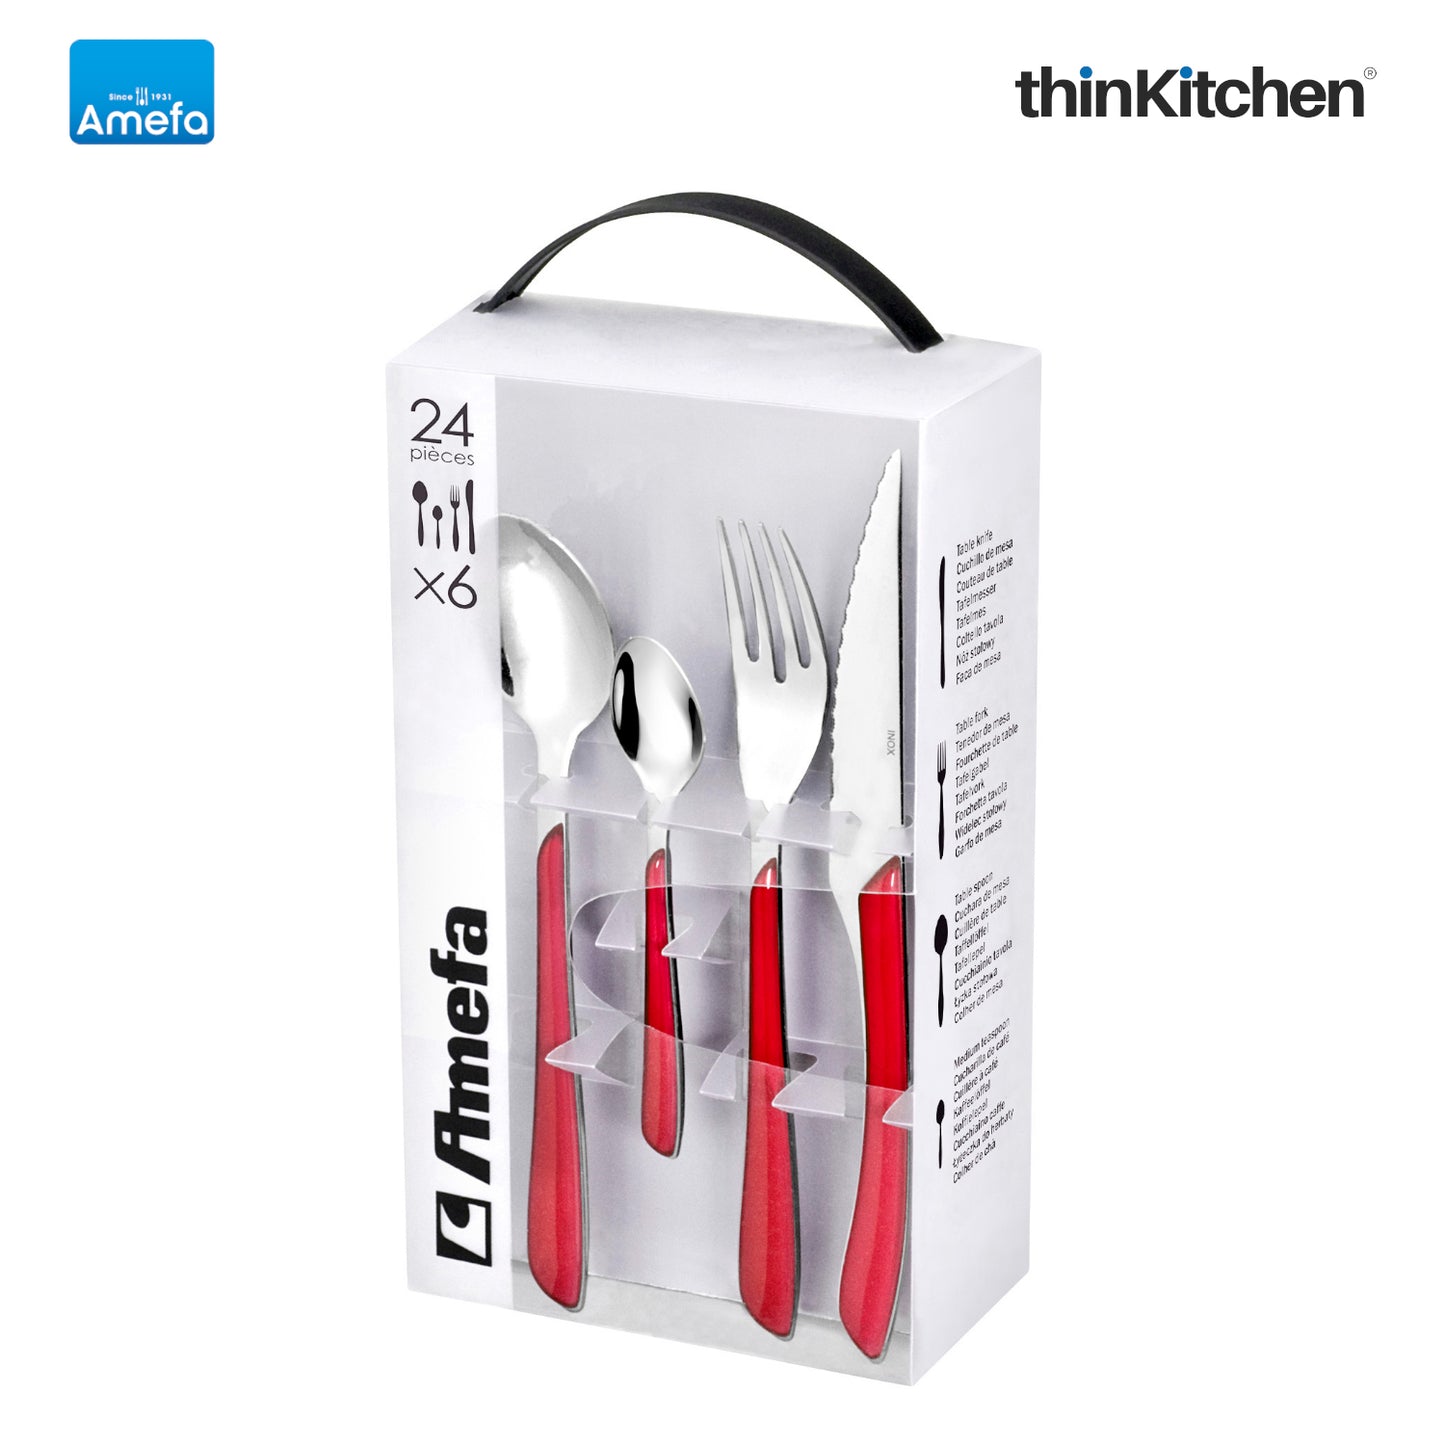 Amefa Eclat Cutlery Gift Box Set Of 24 Red